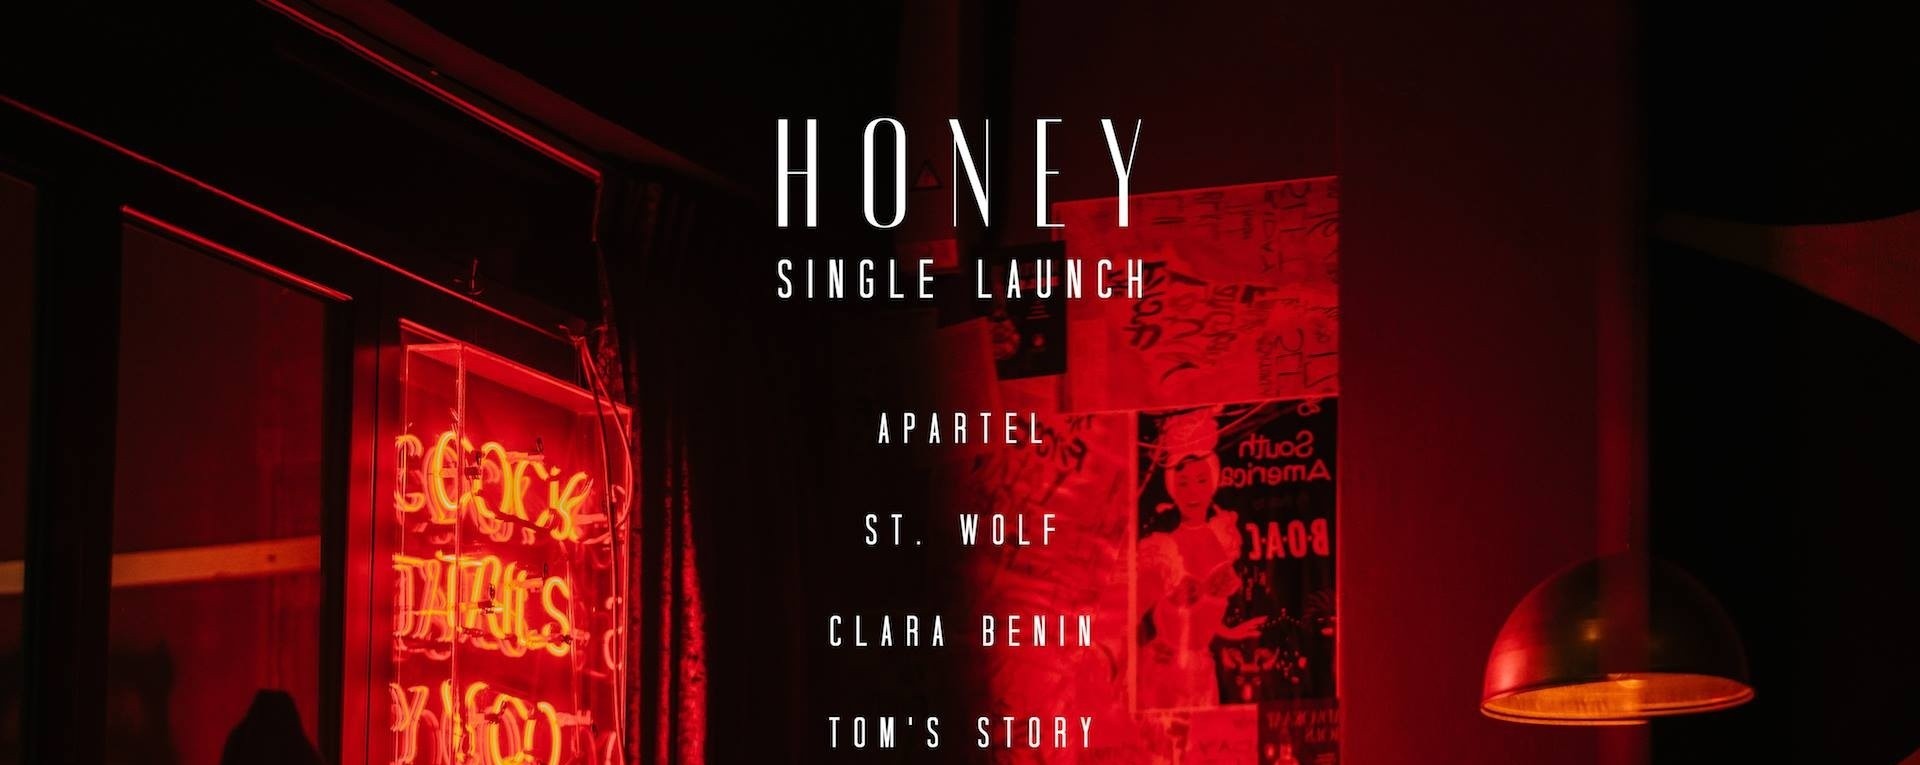 Honey Single Launch